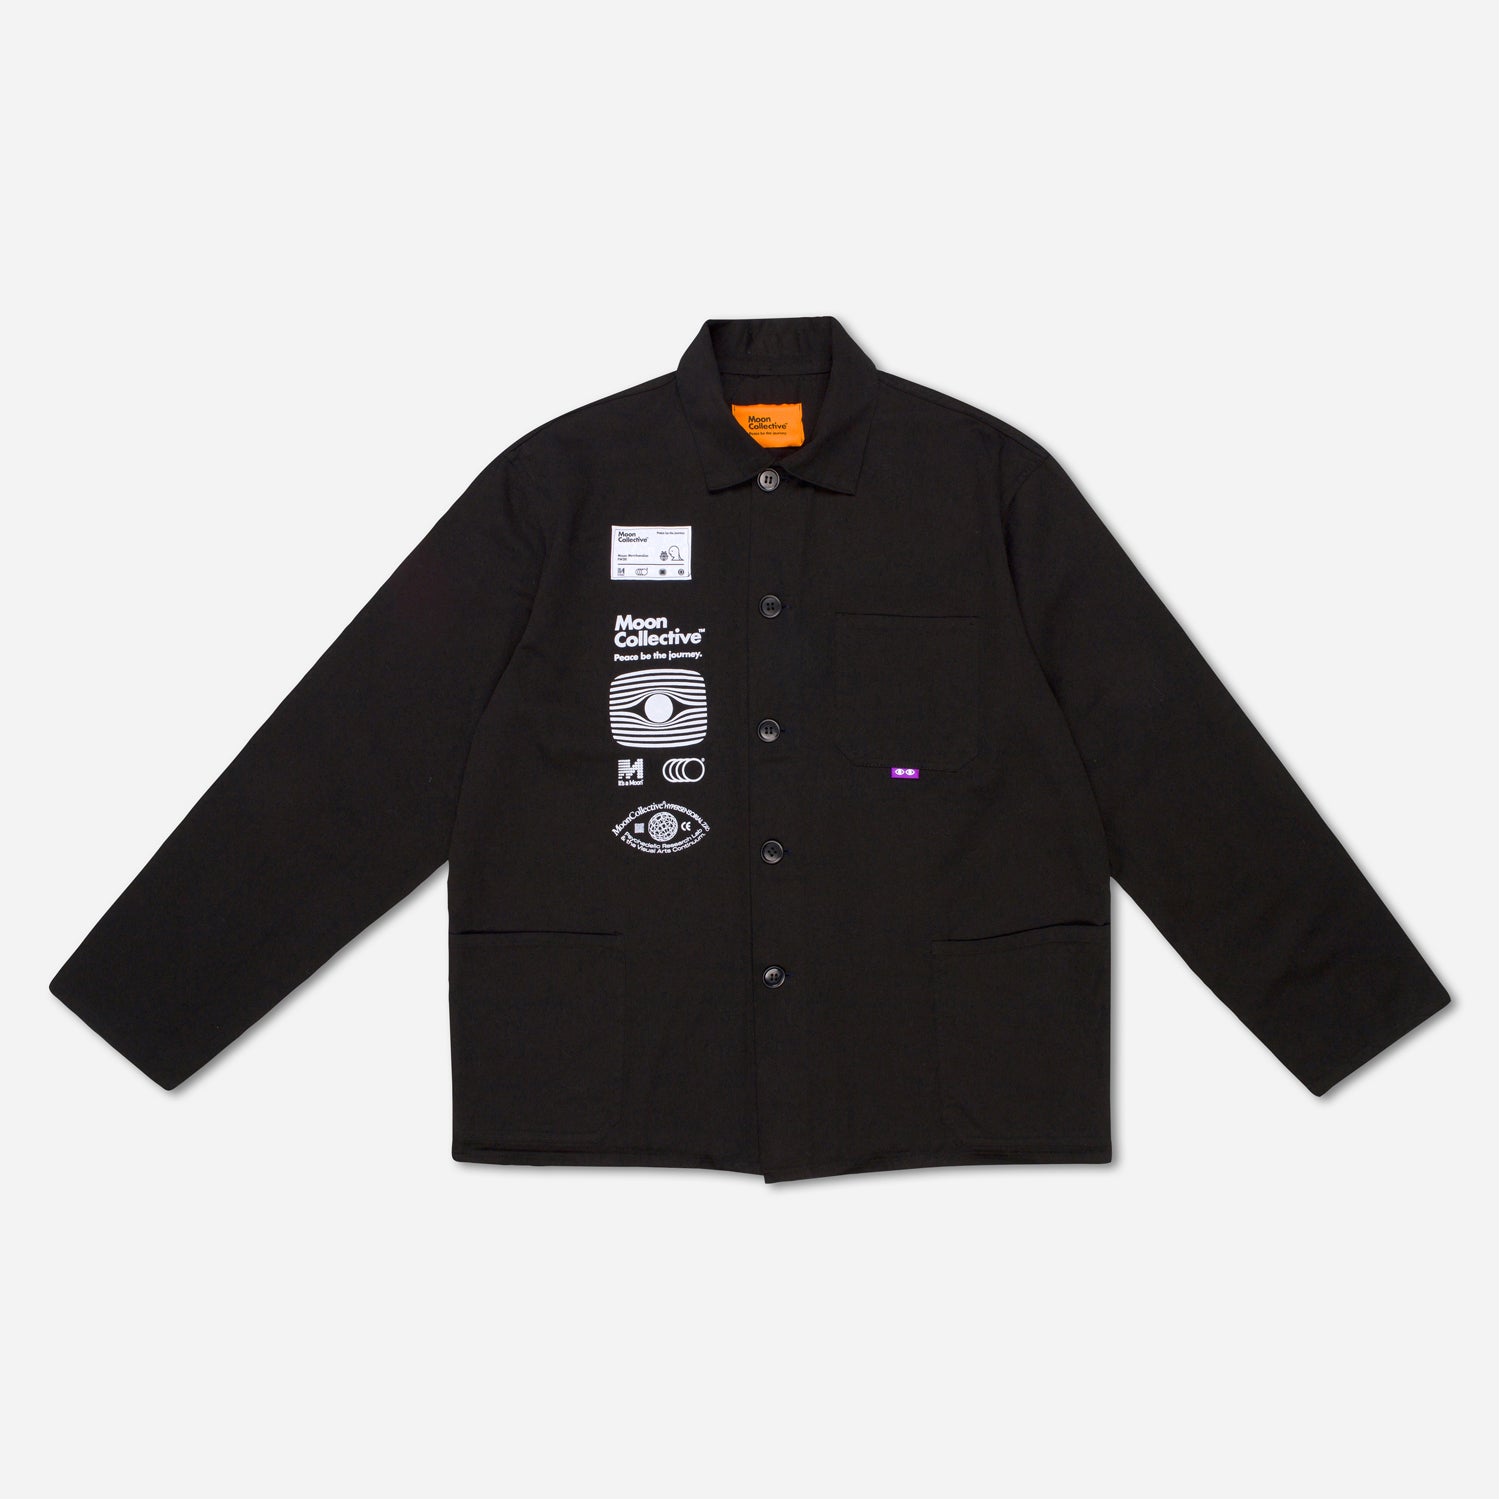 Black Chore Jacket 13B - M/L